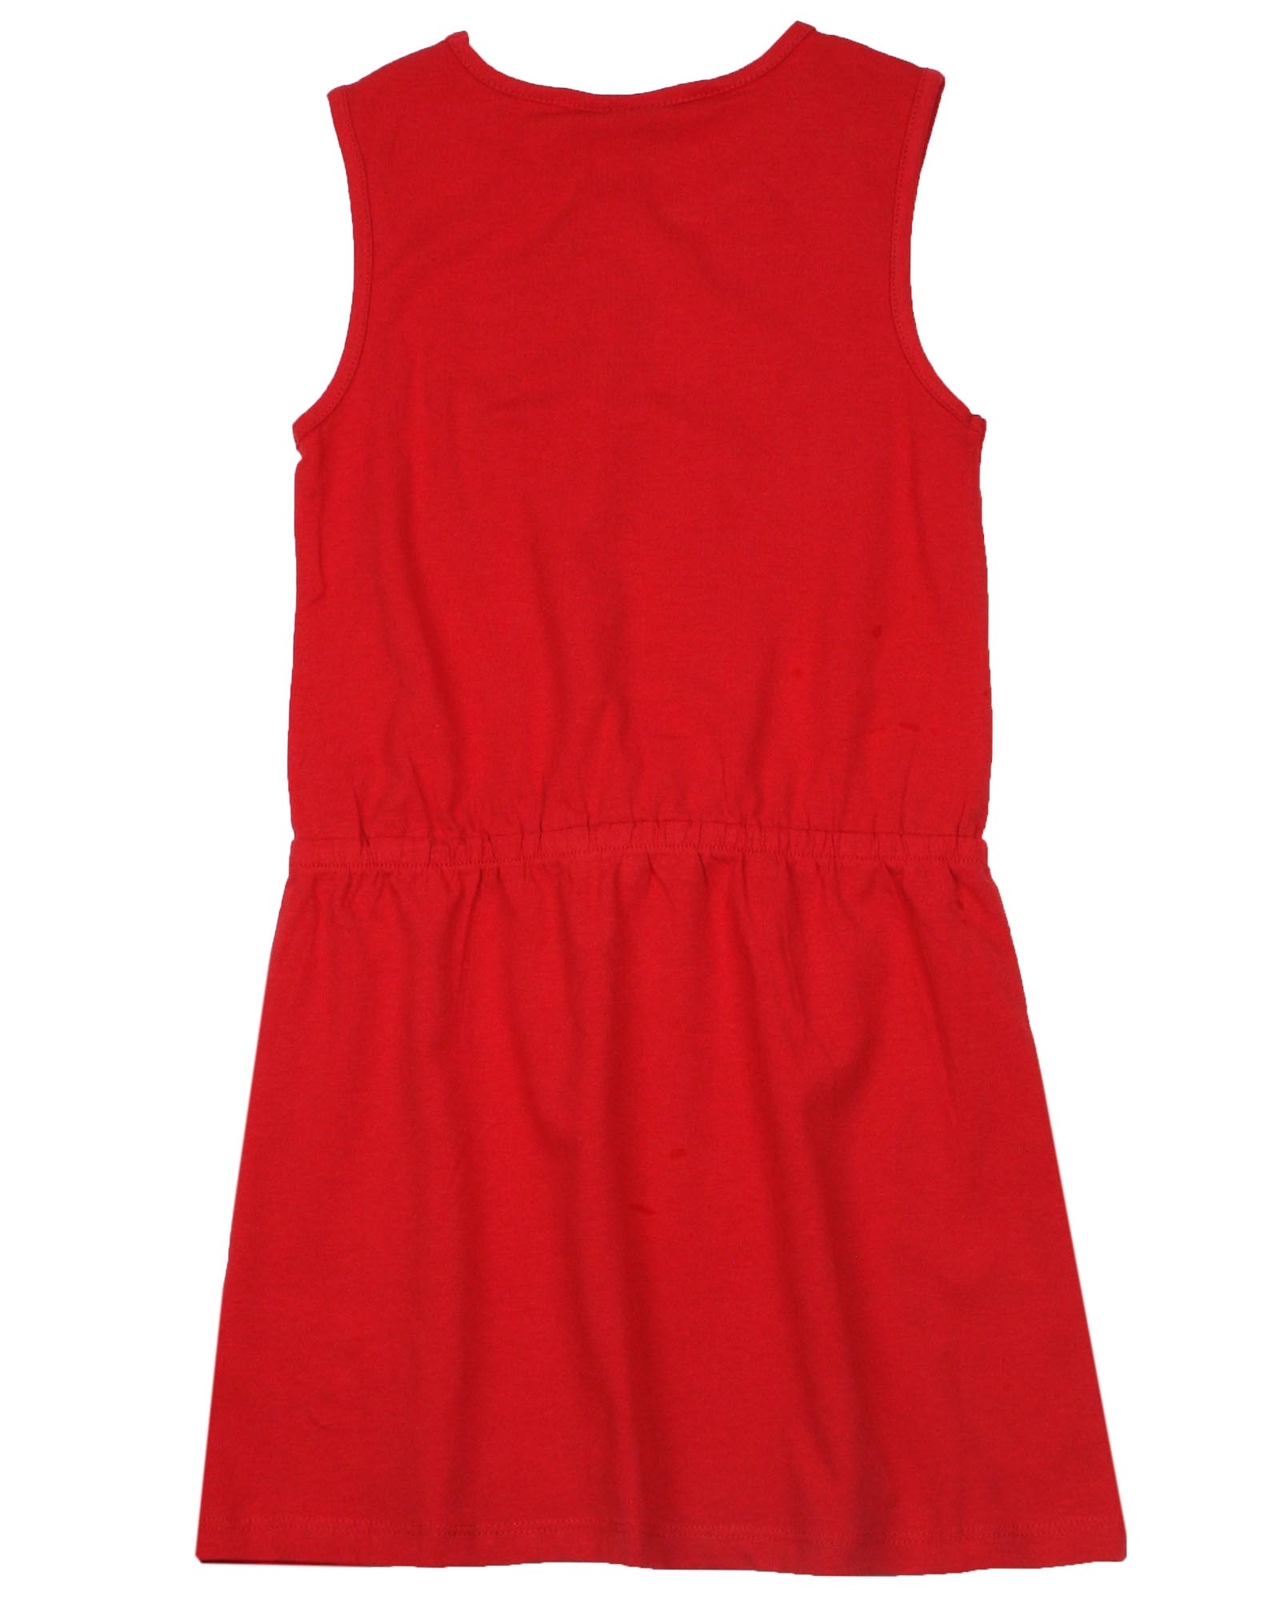 Tuc Tuc Girl's Jersey Dress with Strawberries Print - Tuc Tuc - Tuc Tuc ...